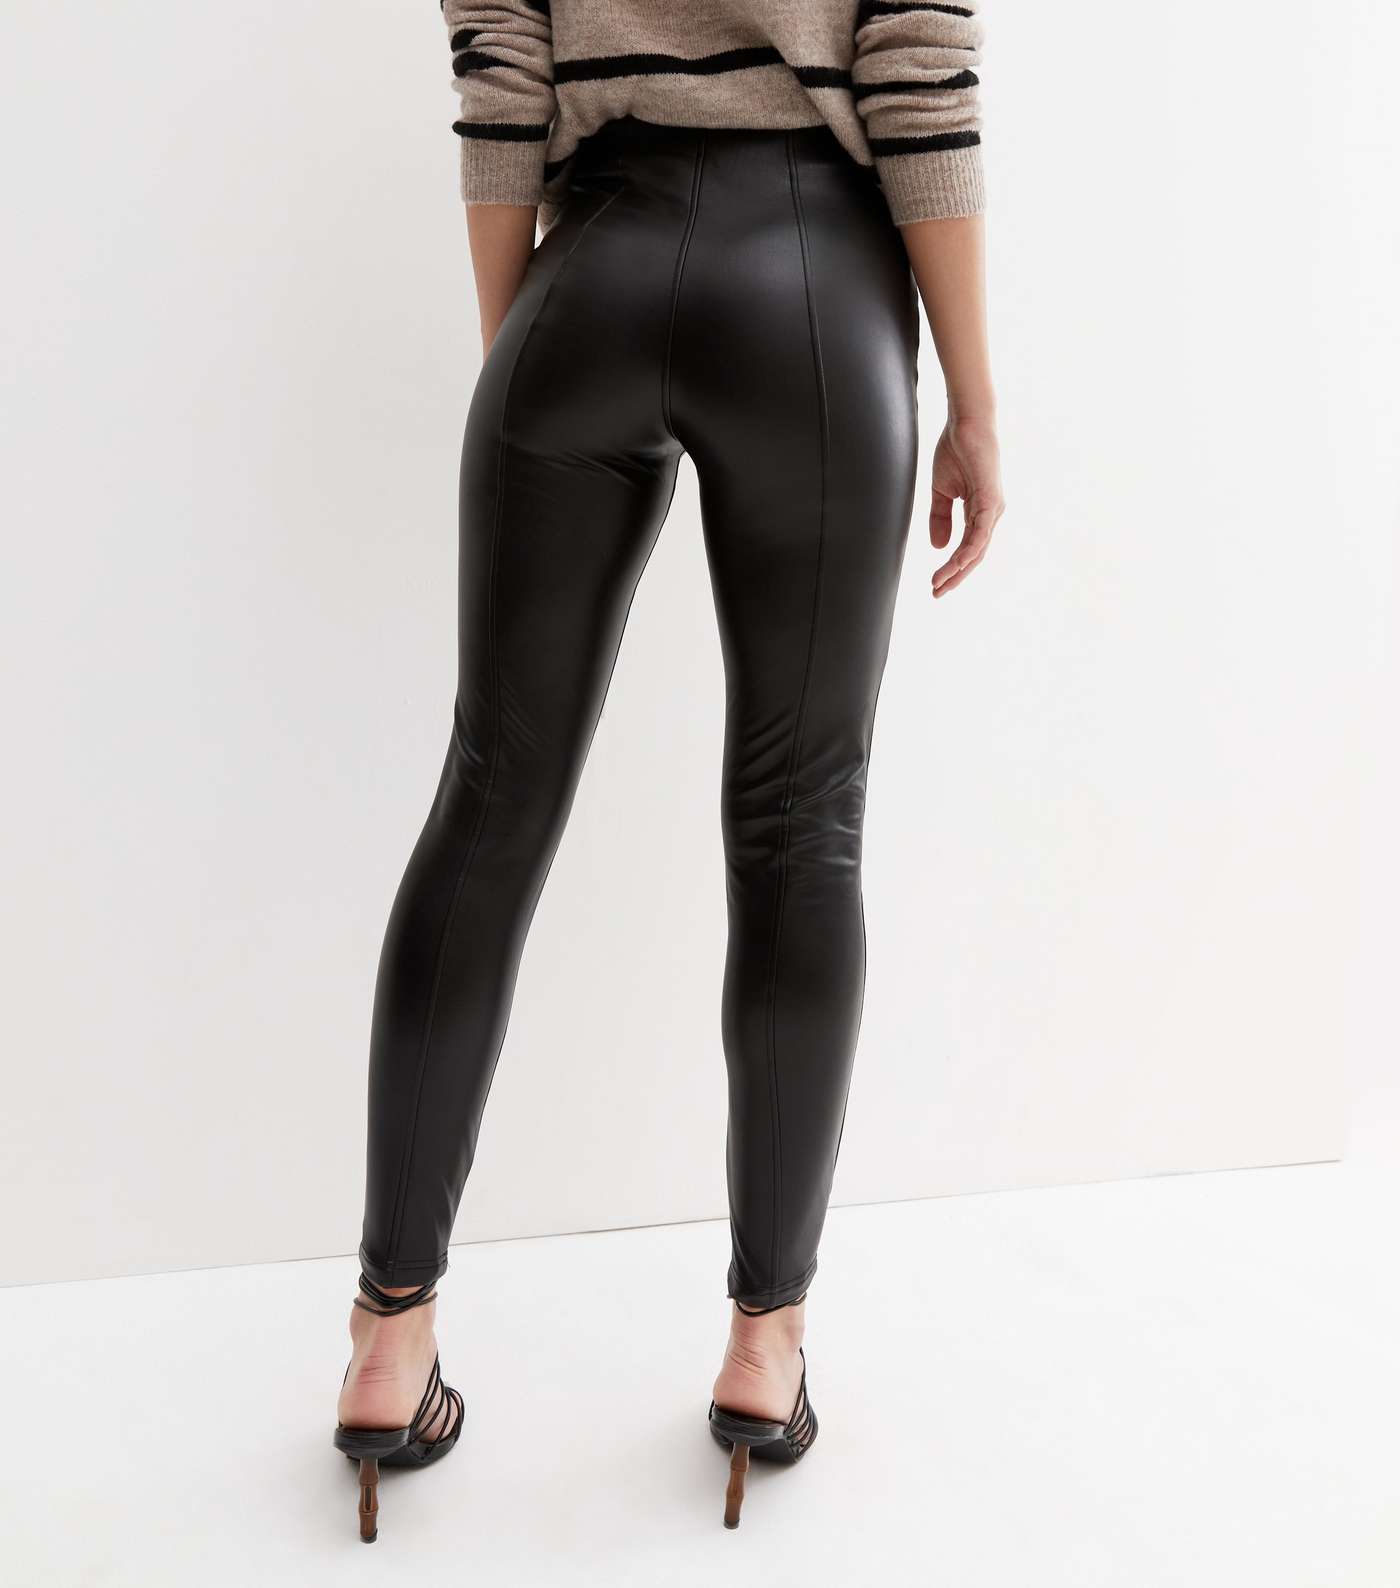 Black Leather-Look High Waist Leggings Image 4